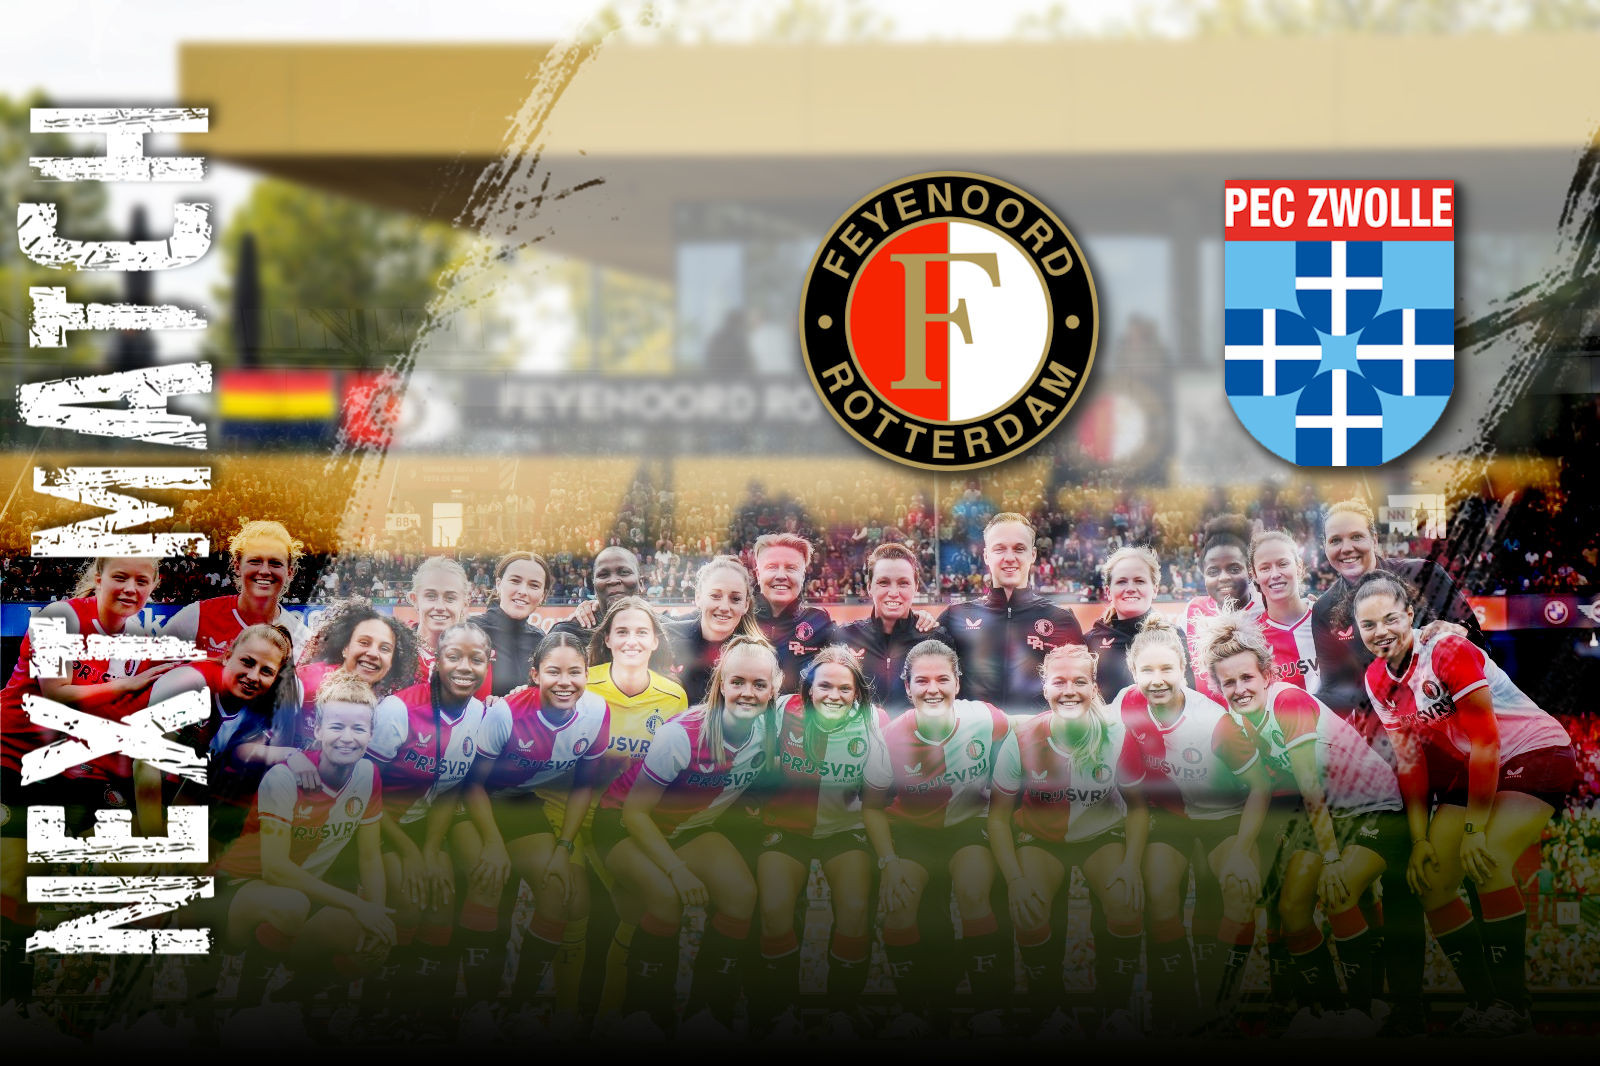 NEXT MATCH • Feyenoord ontvangt PEC Zwolle